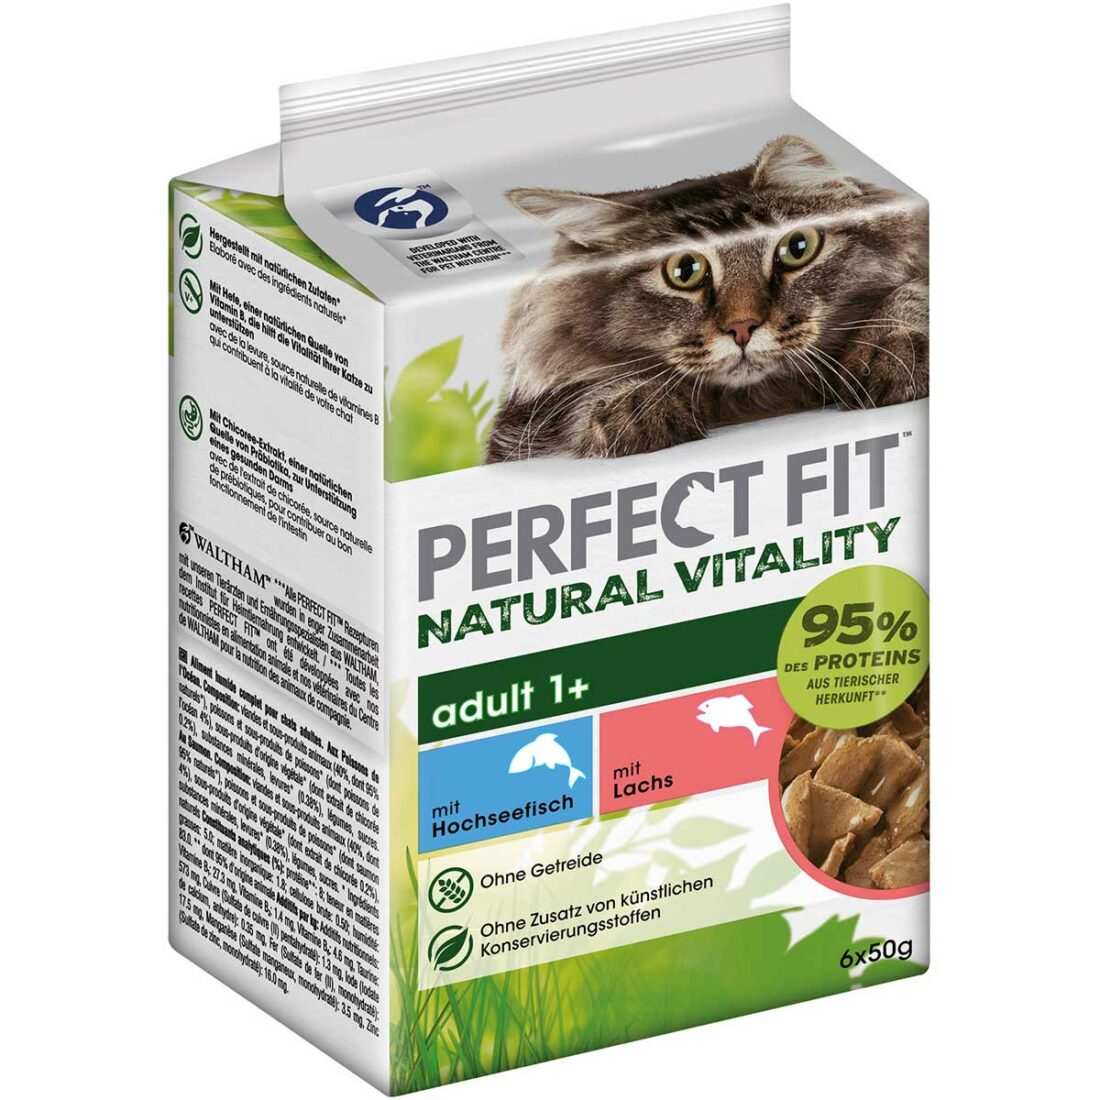 PERFECT FIT Natural Vitality Adult 1+ krmivo pro kočky s rybami